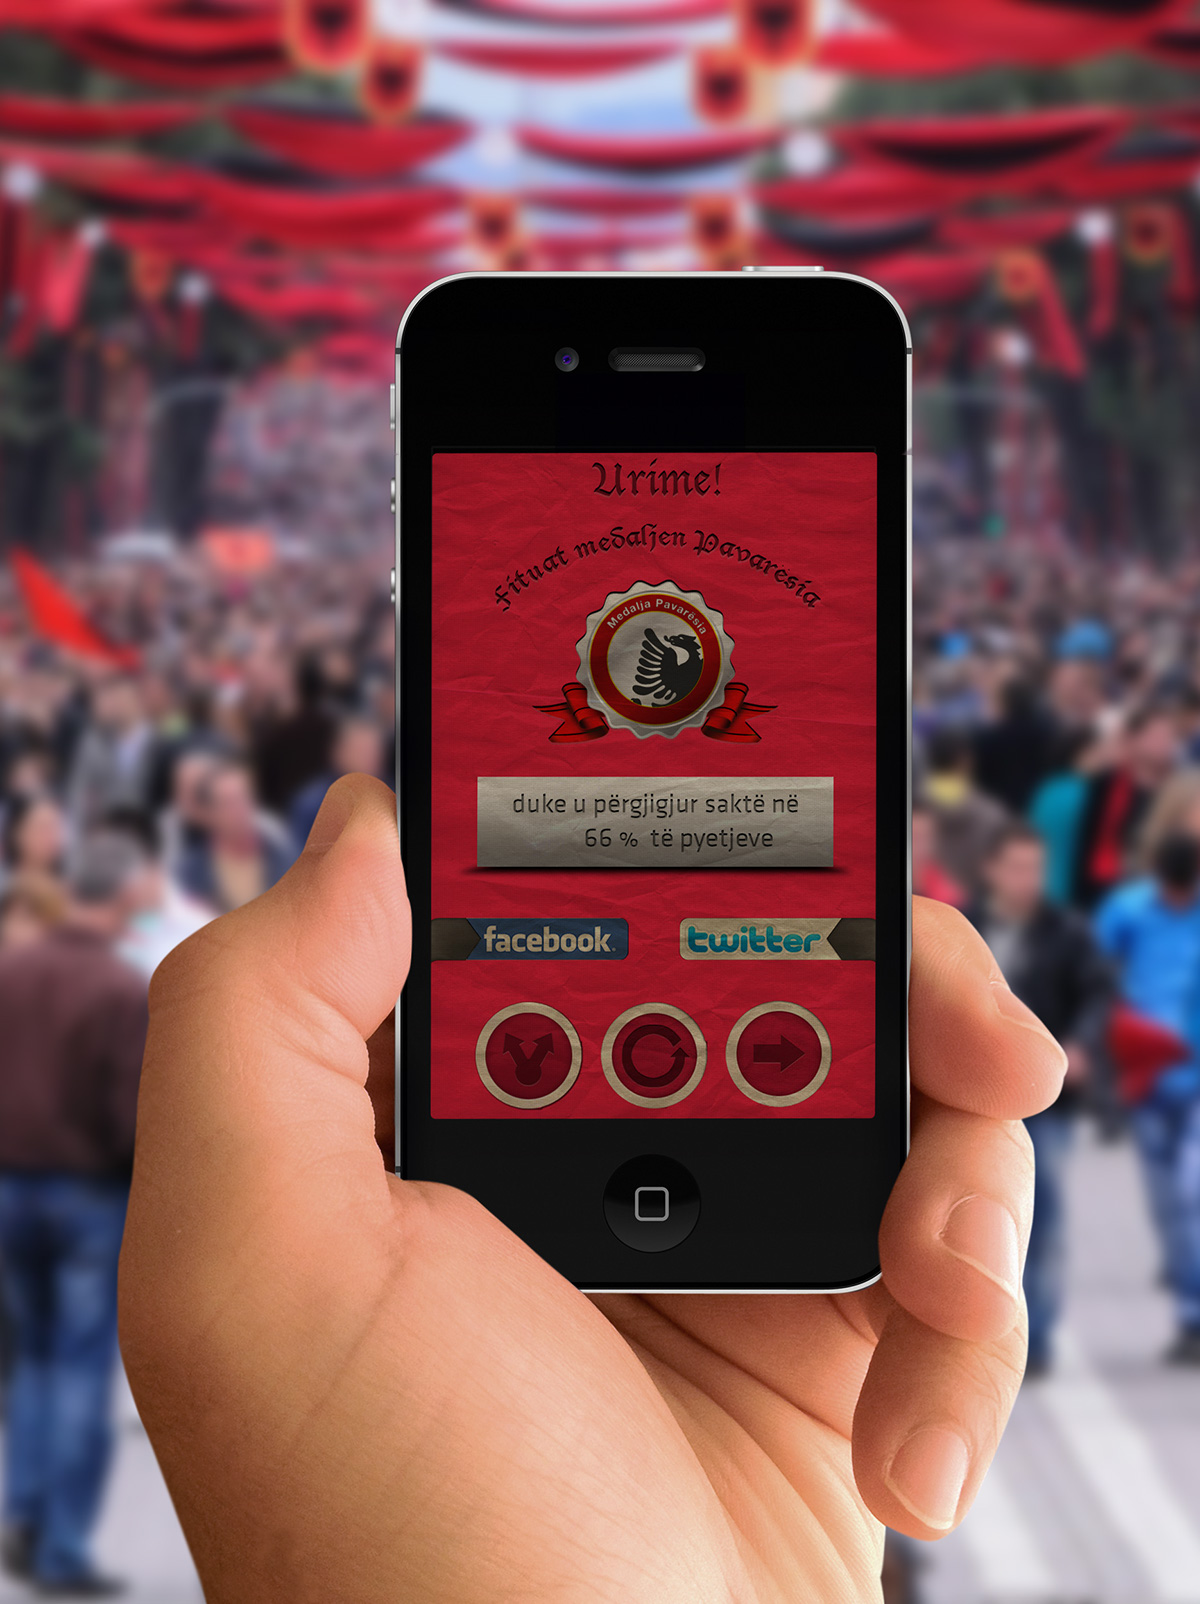 erdis driza ship shtet 100 vjet Albania kosovo albanian history albania independence app android ios Quiz Mobile app